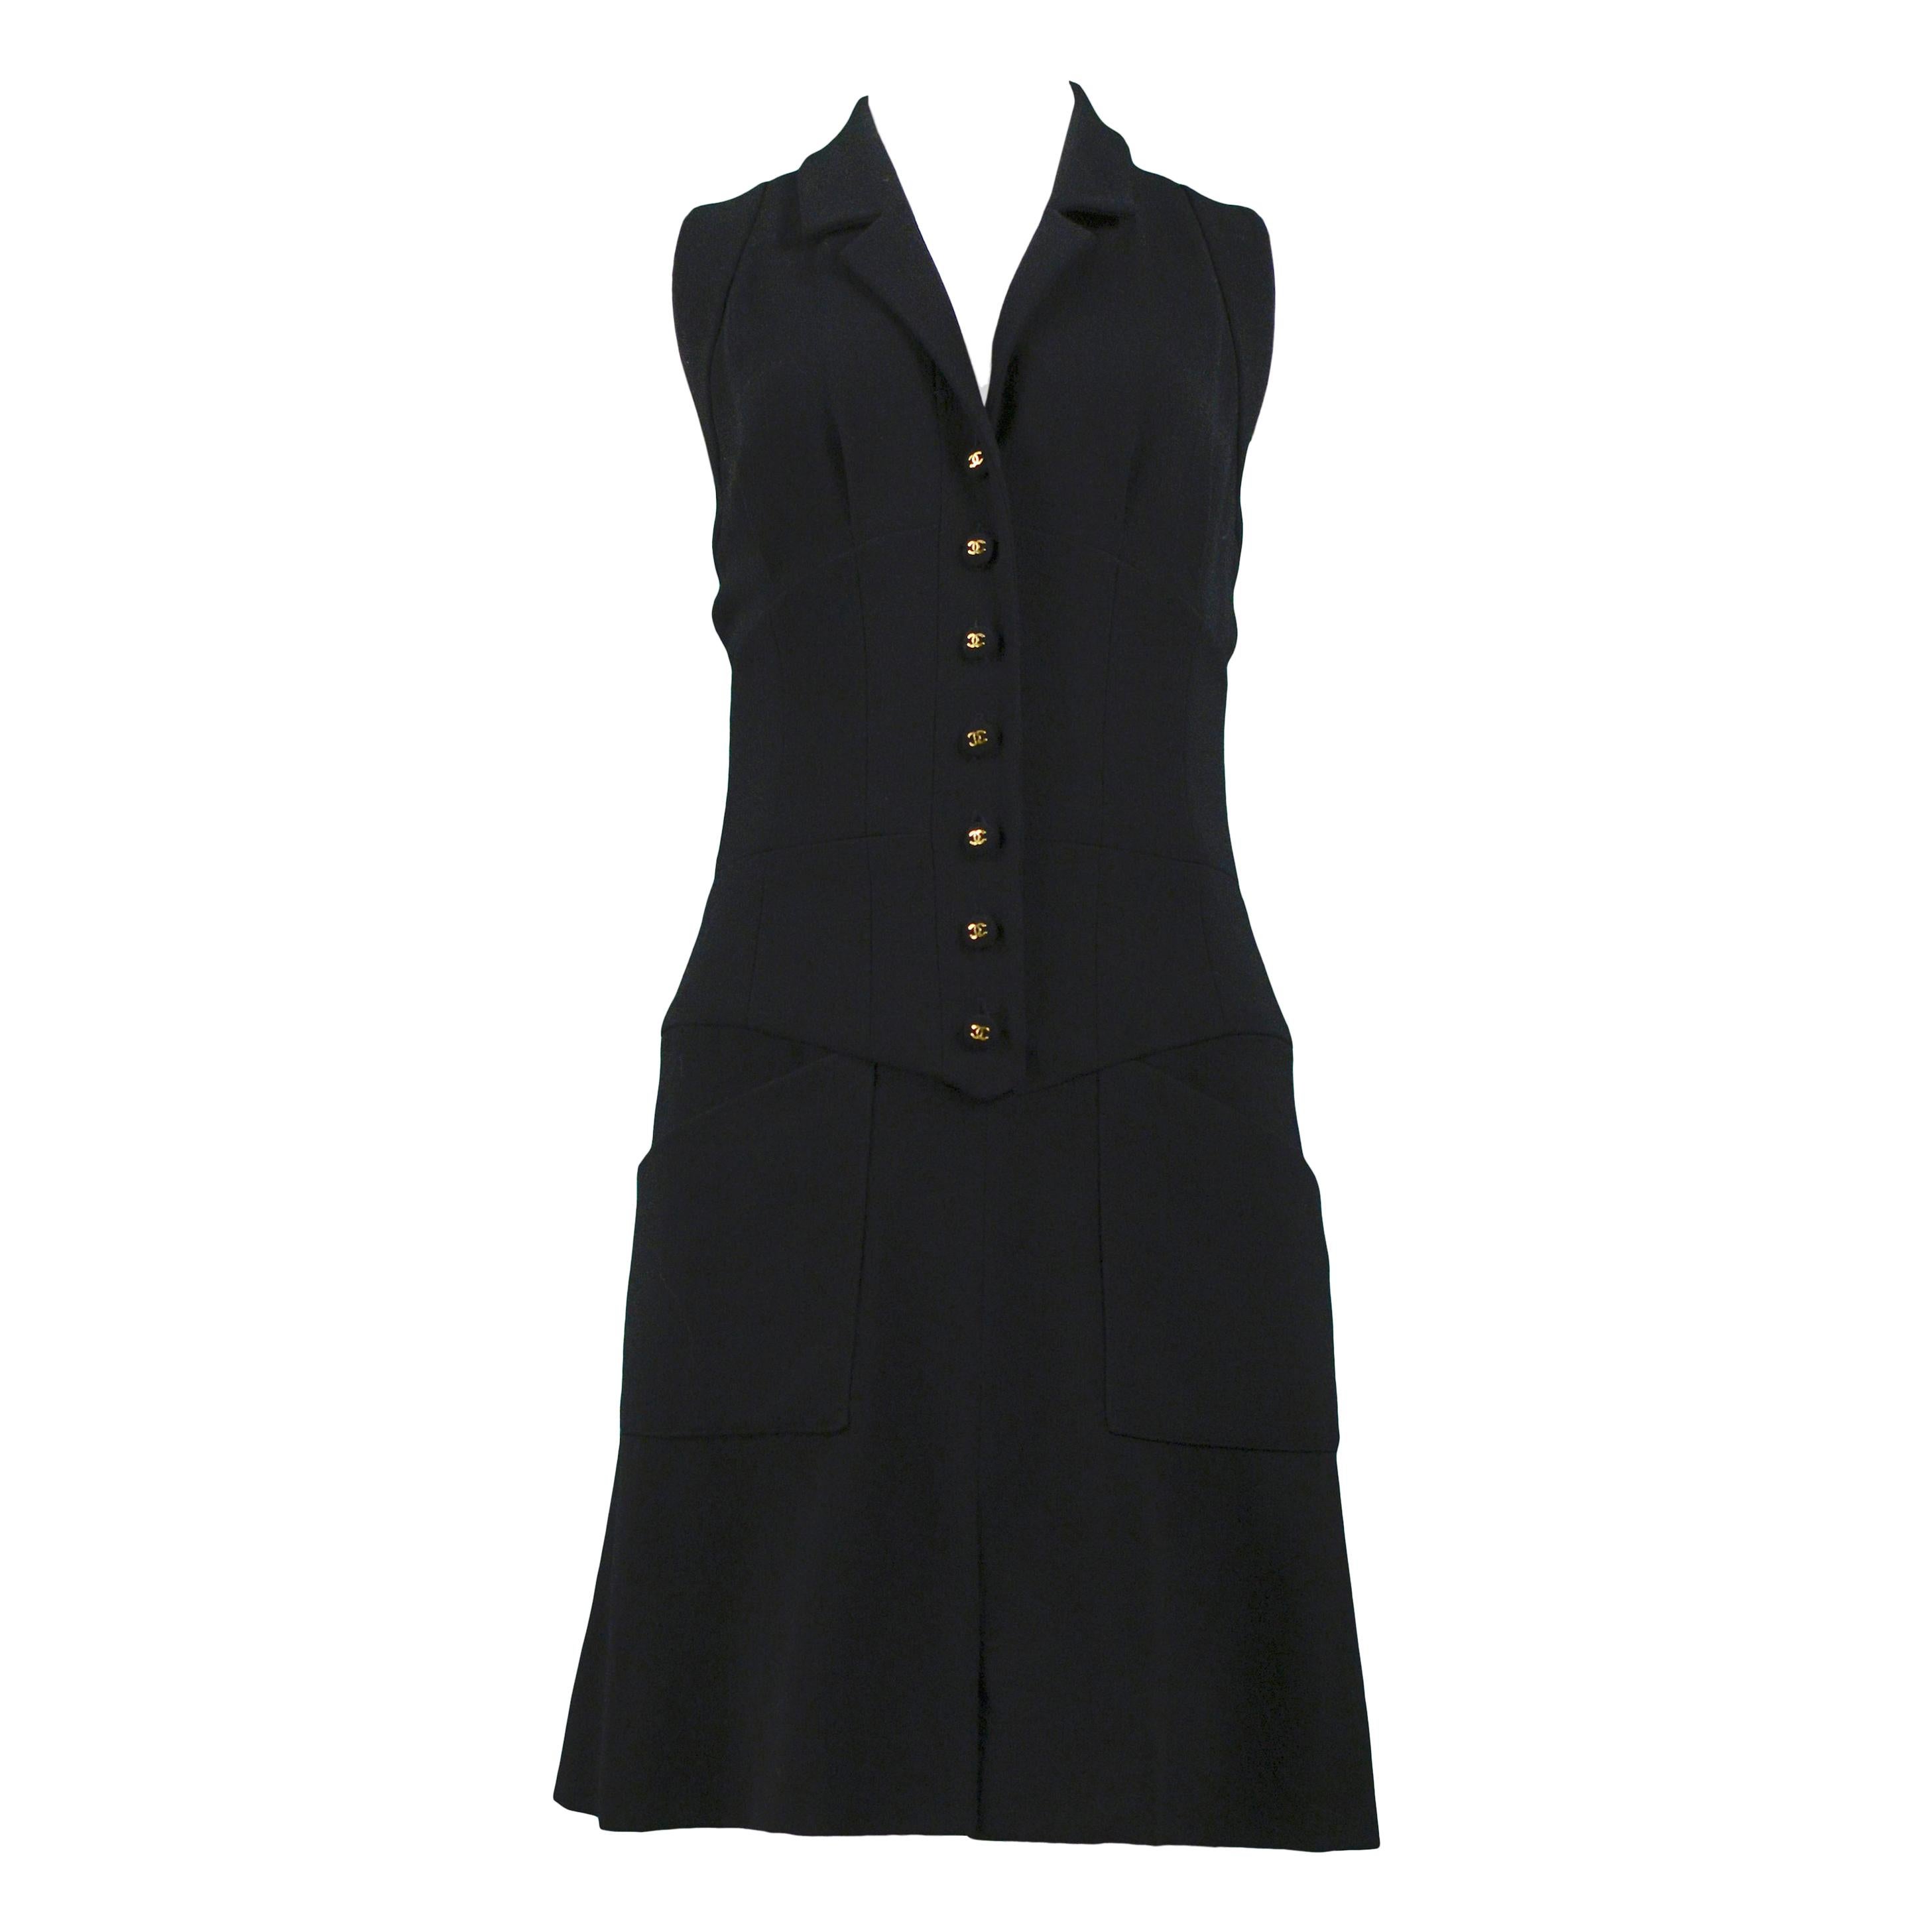 Vintage Chanel Black Button Front Dress 1995